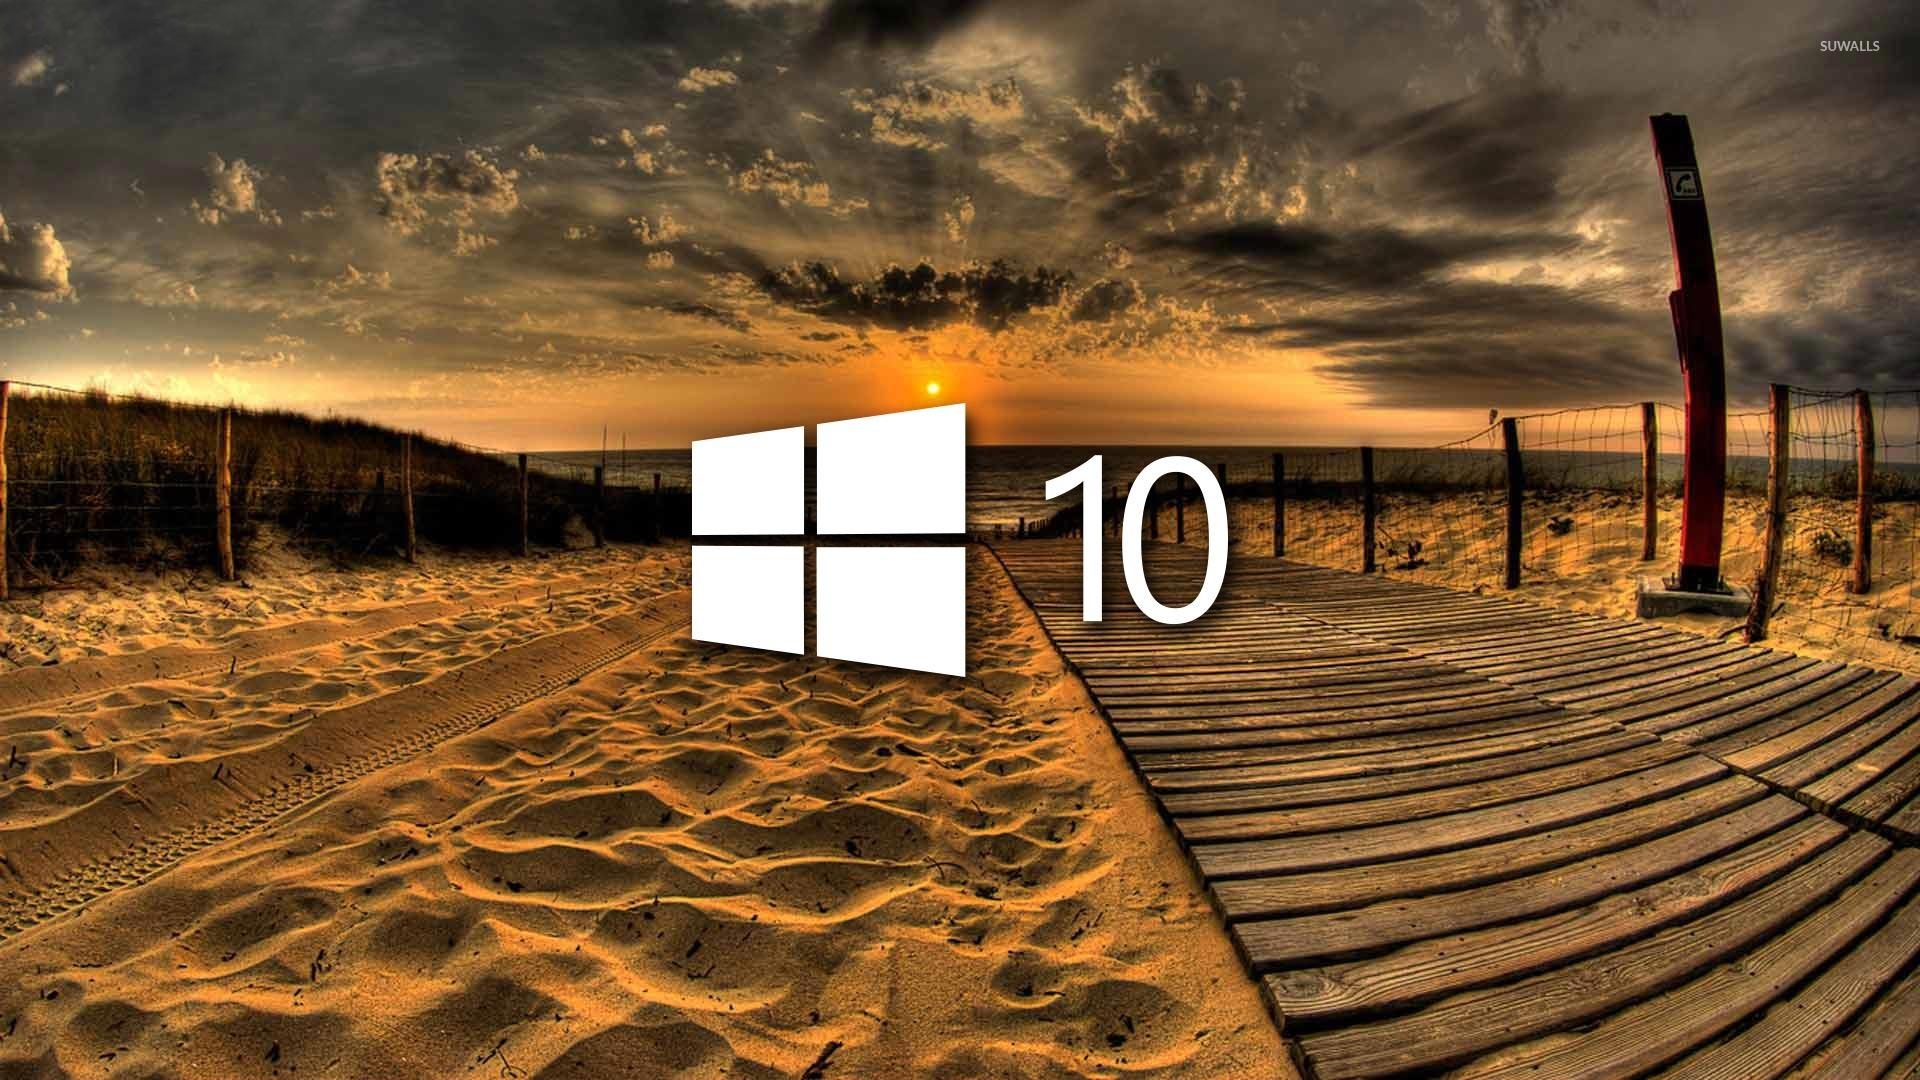 Windows 10 on the boardwalk white logo wallpaper